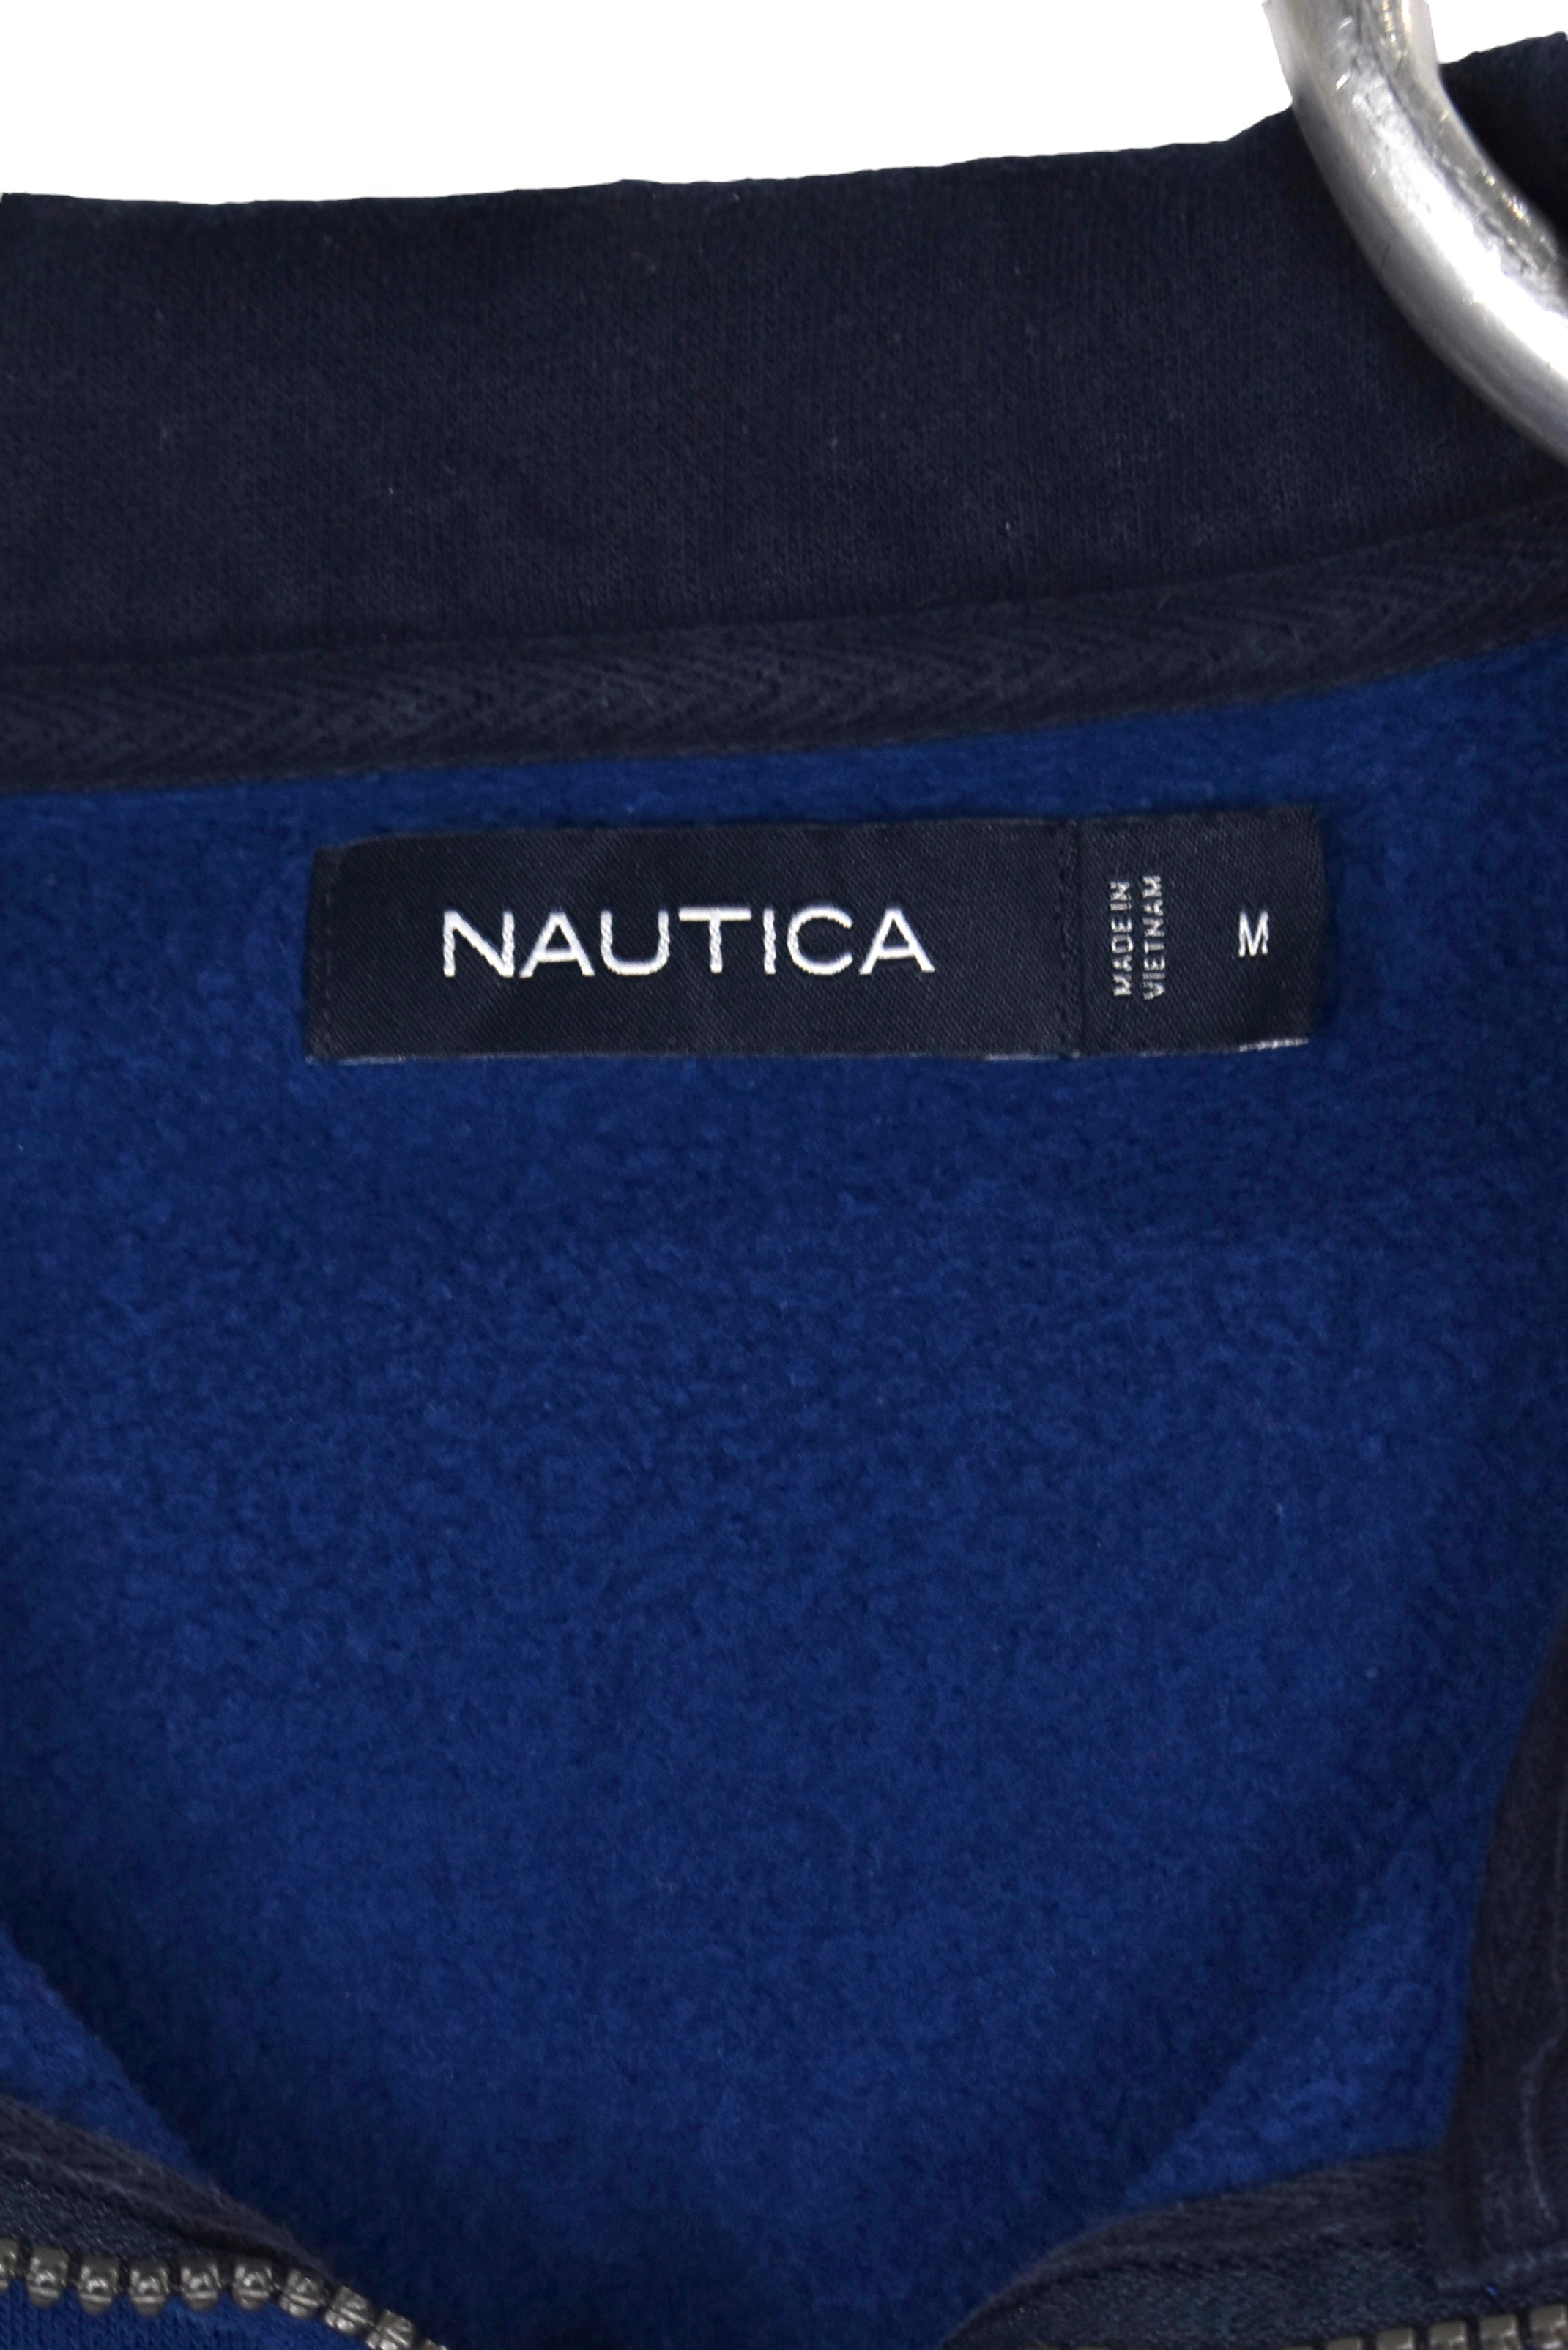 Vintage Nautica 1/4 zip (M), navy embroidered sweatshirt